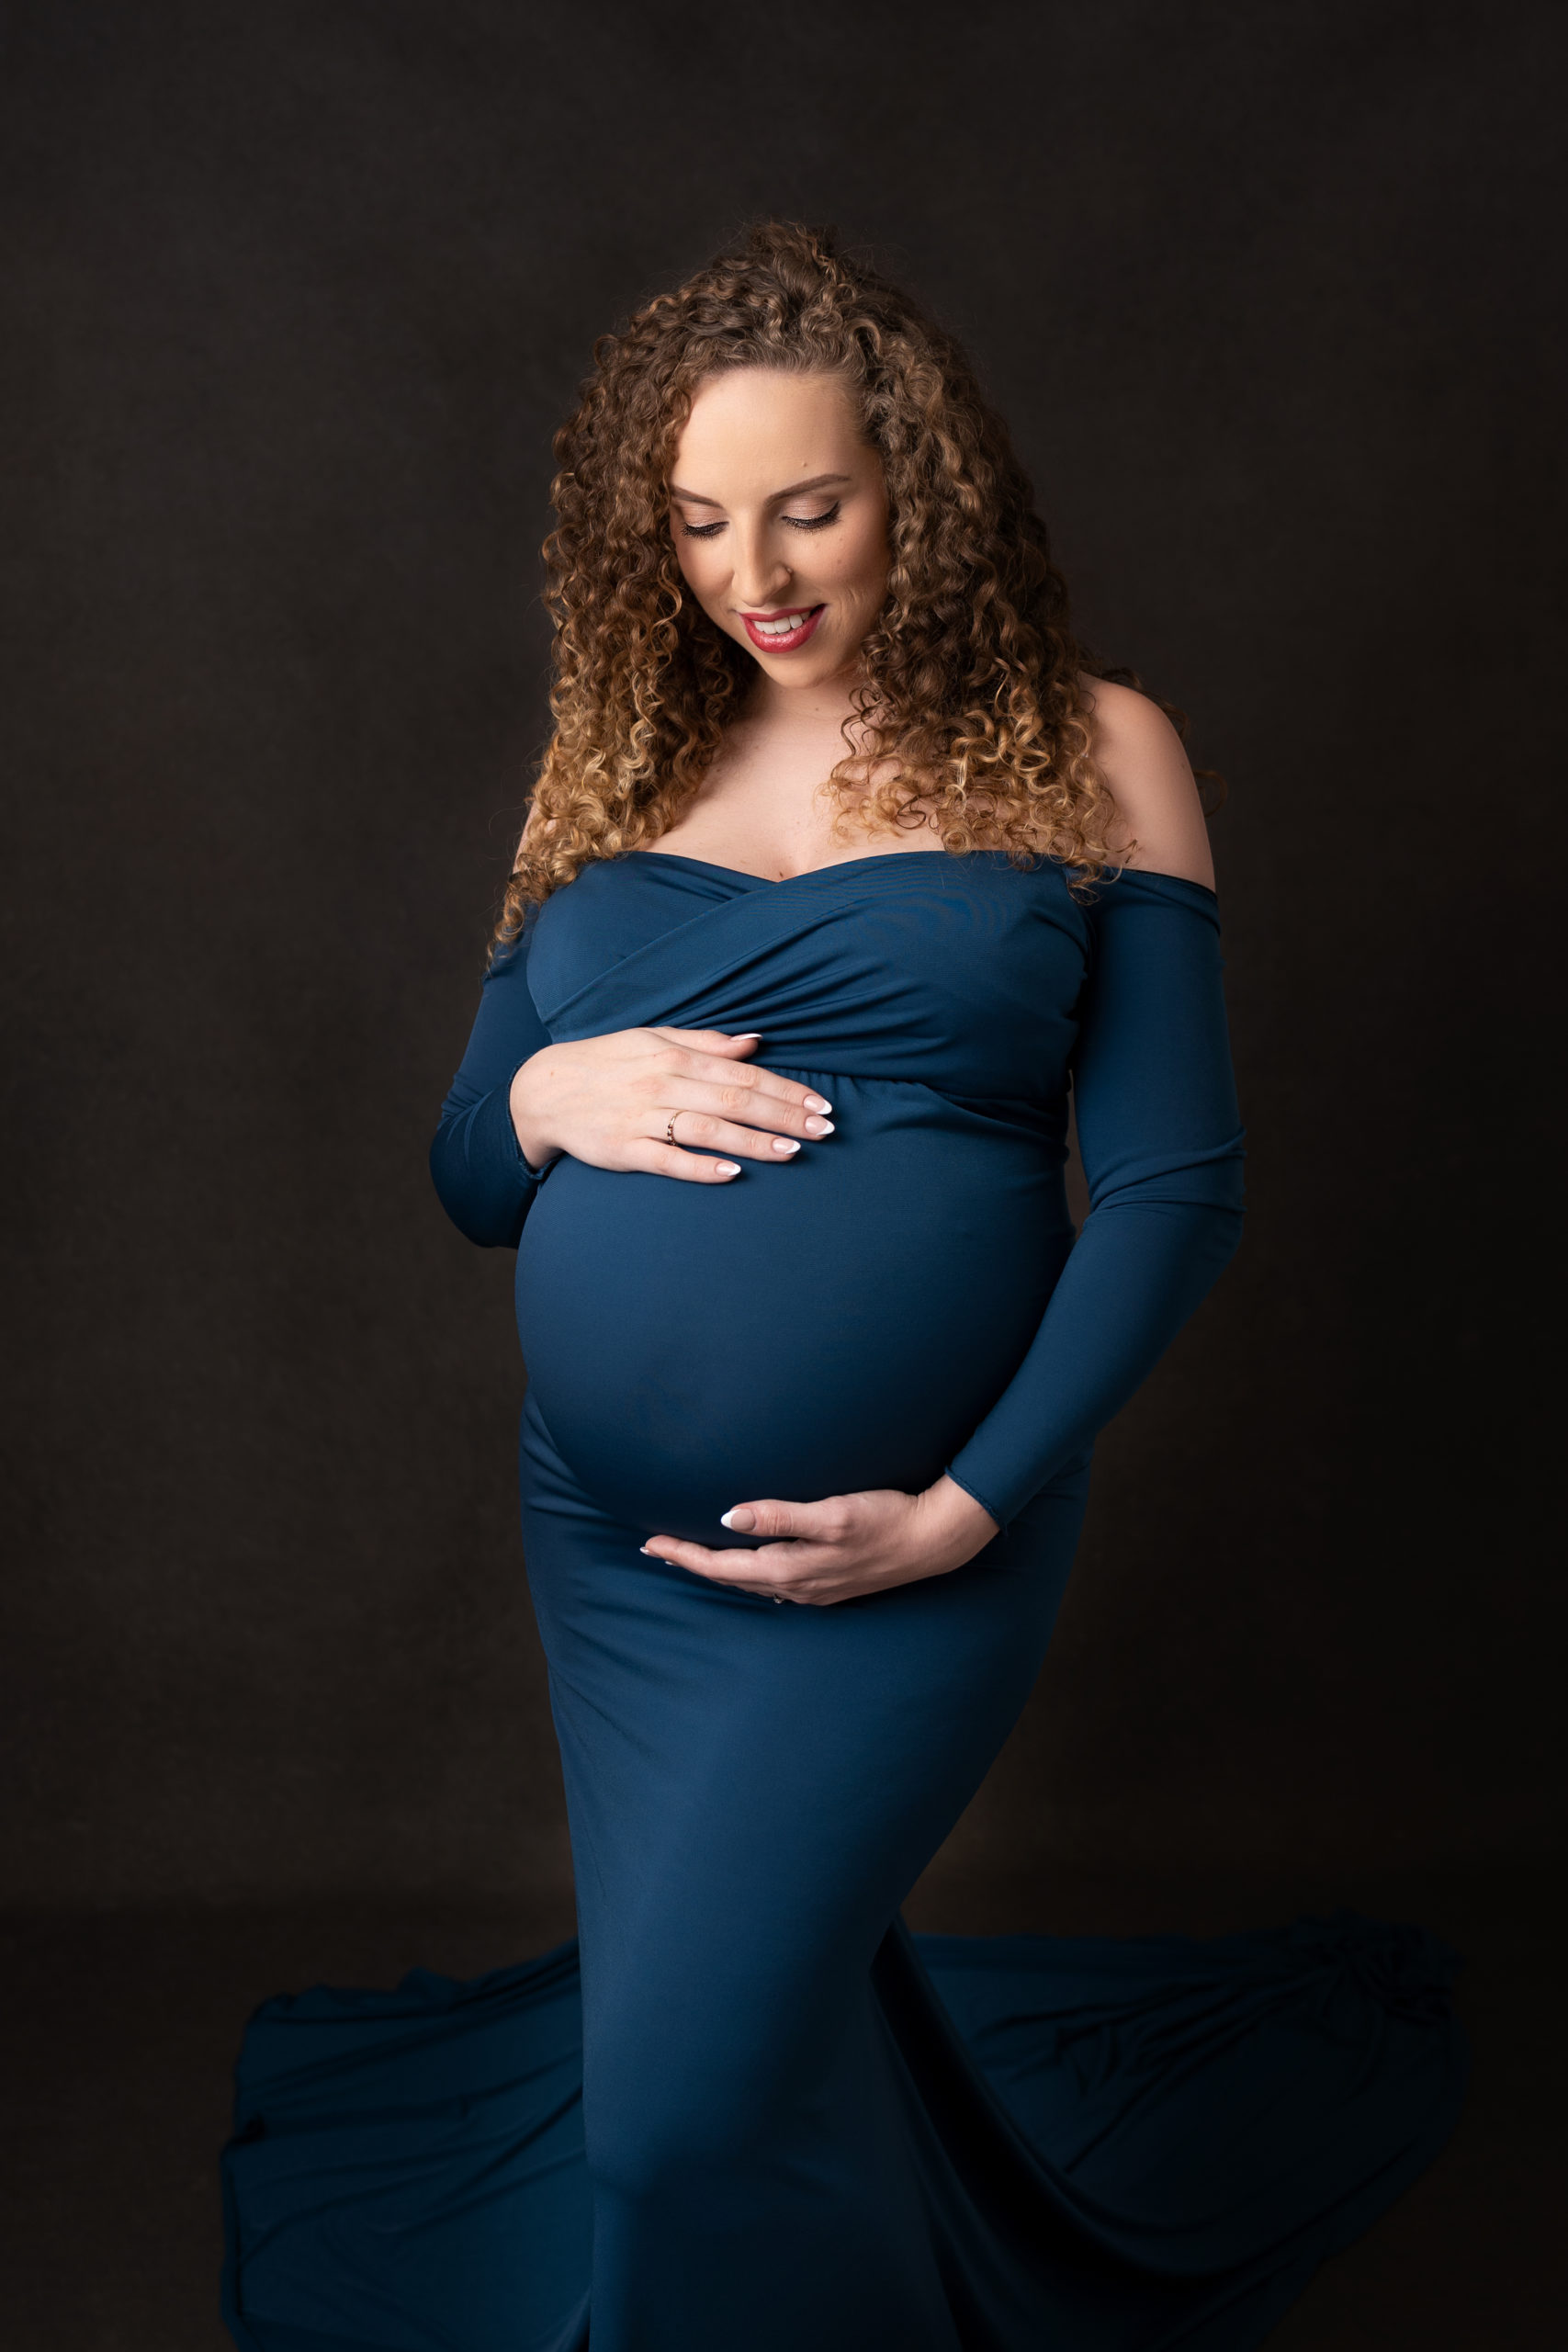 Pregnancy shoot on dark backdrop